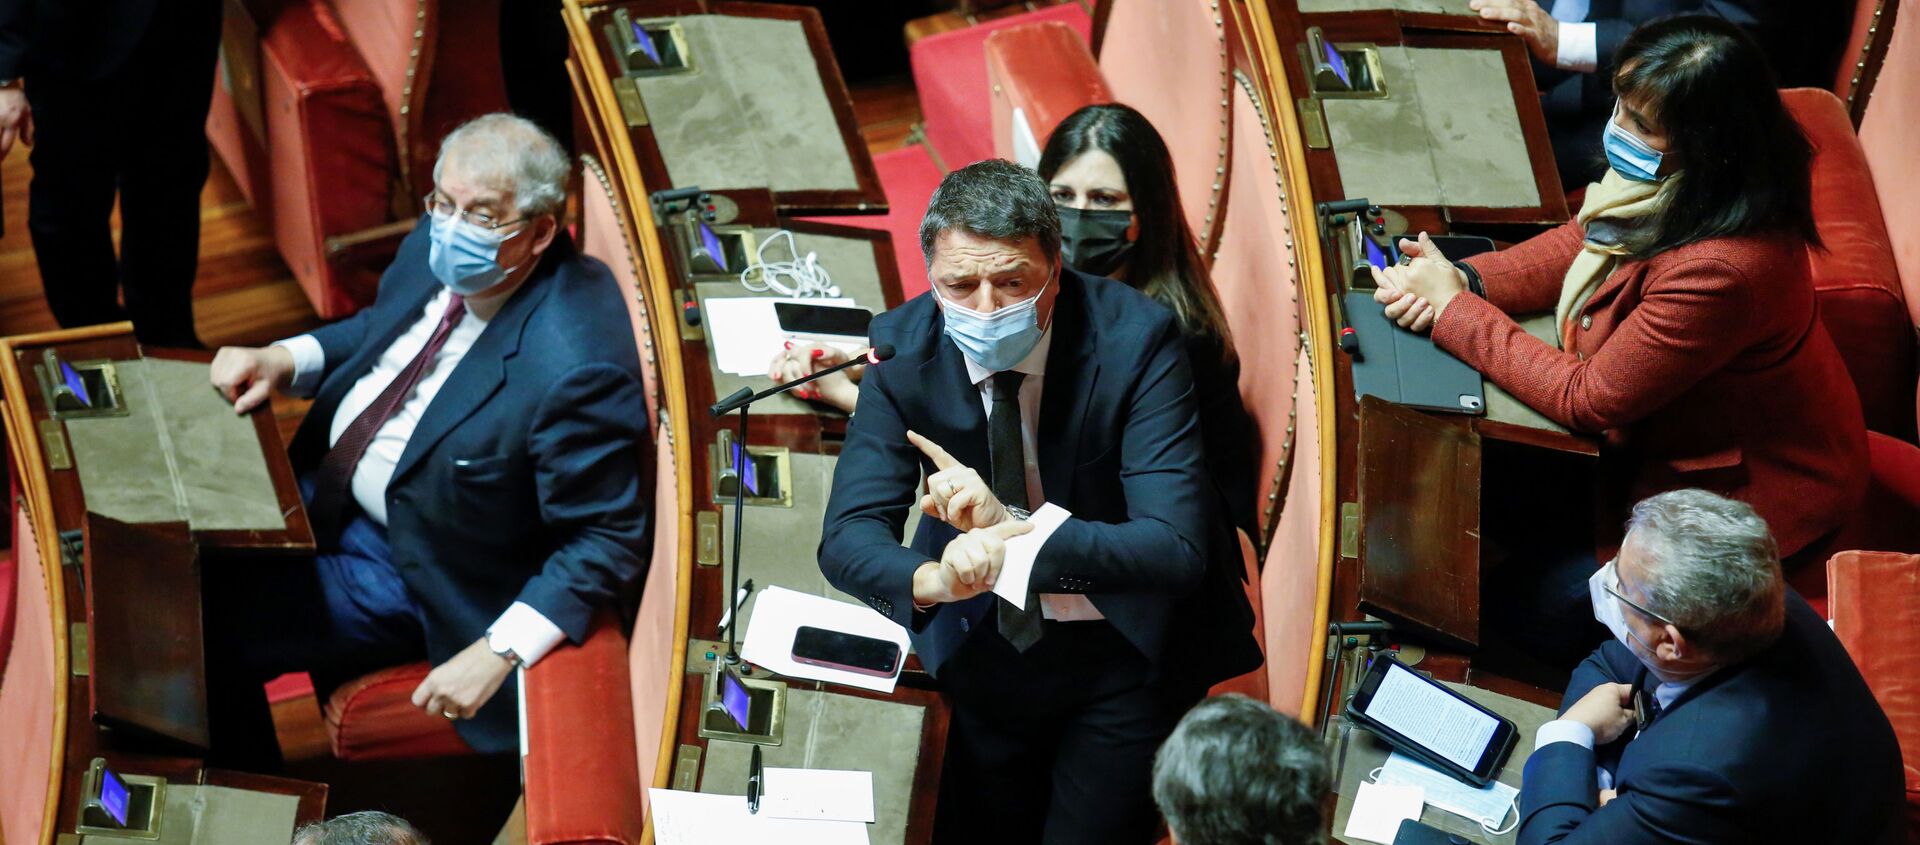 Matteo Renzi, líder del partido político Italia Viva - Sputnik Mundo, 1920, 14.01.2021